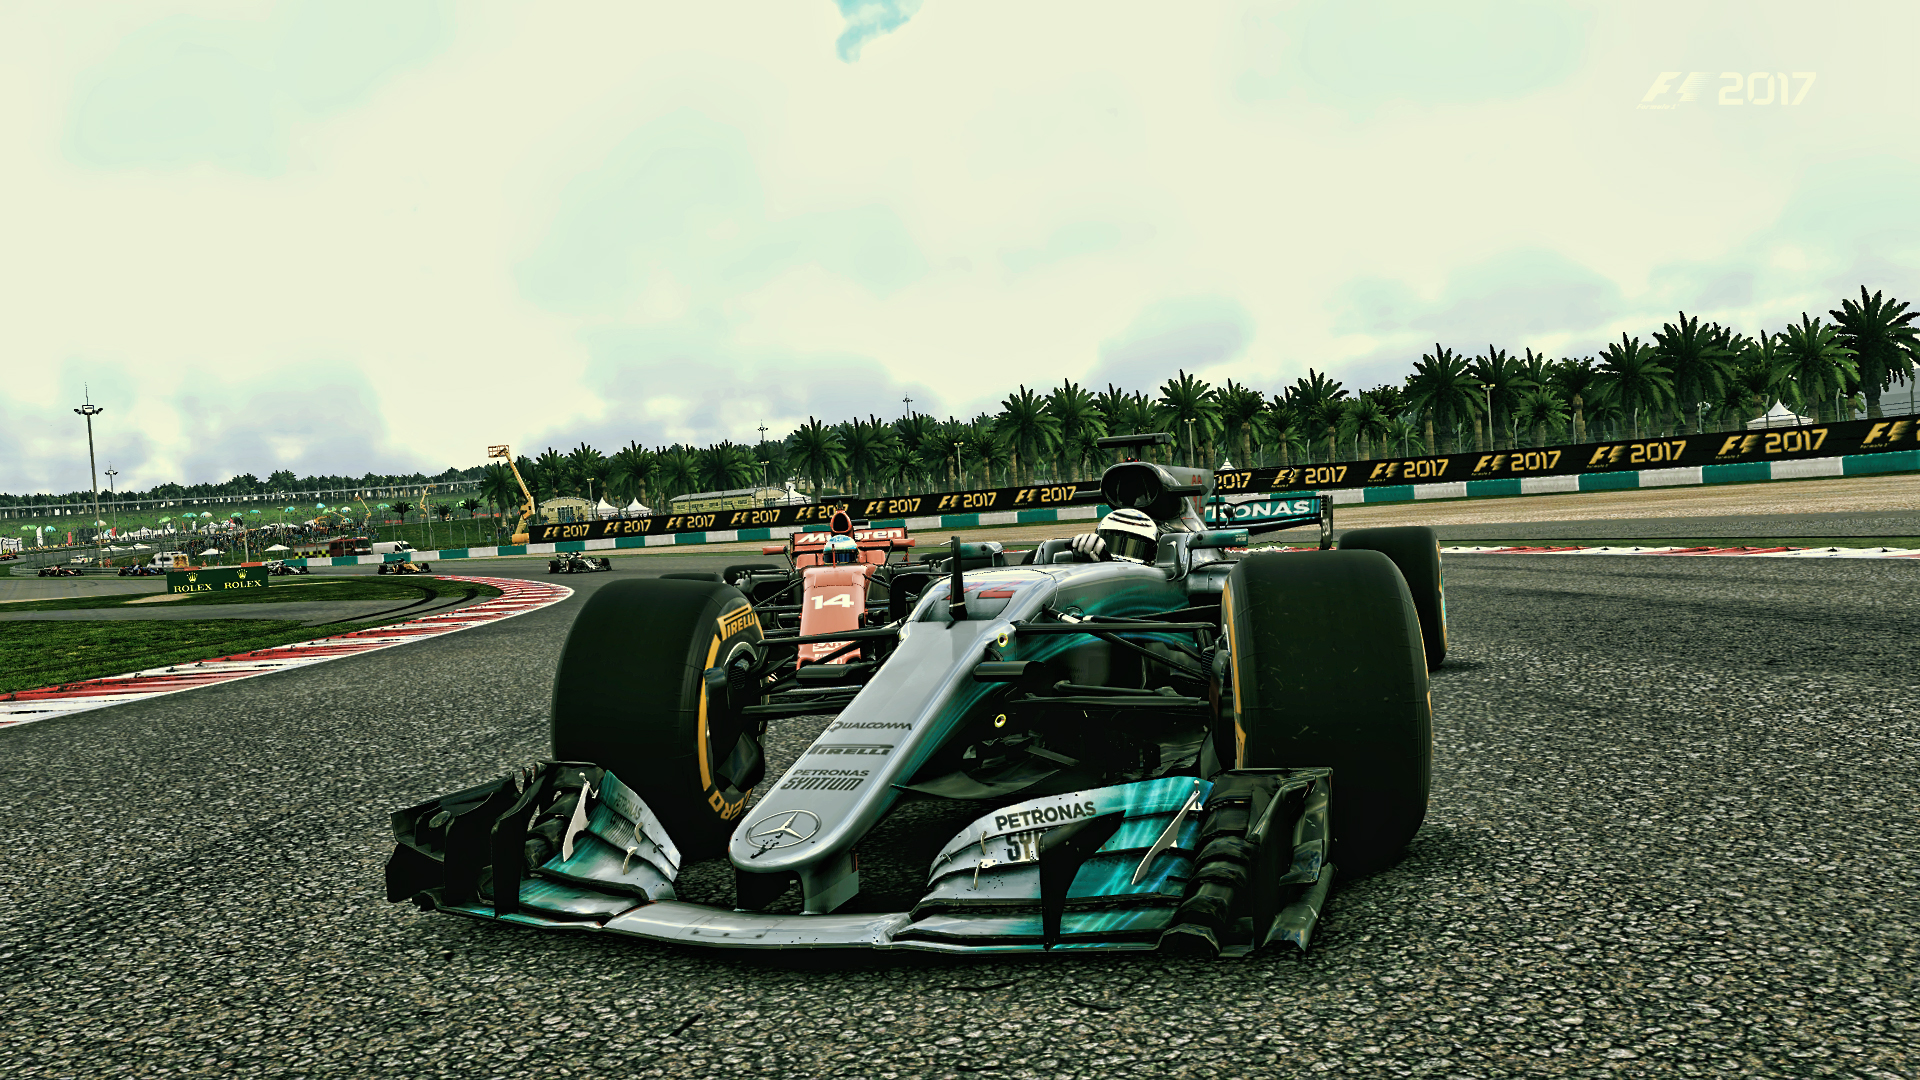 F1 2017 Formula 1 Mercedes AMG Petronas Video Games Grand Prix 2017 Year Screen Shot 1920x1080